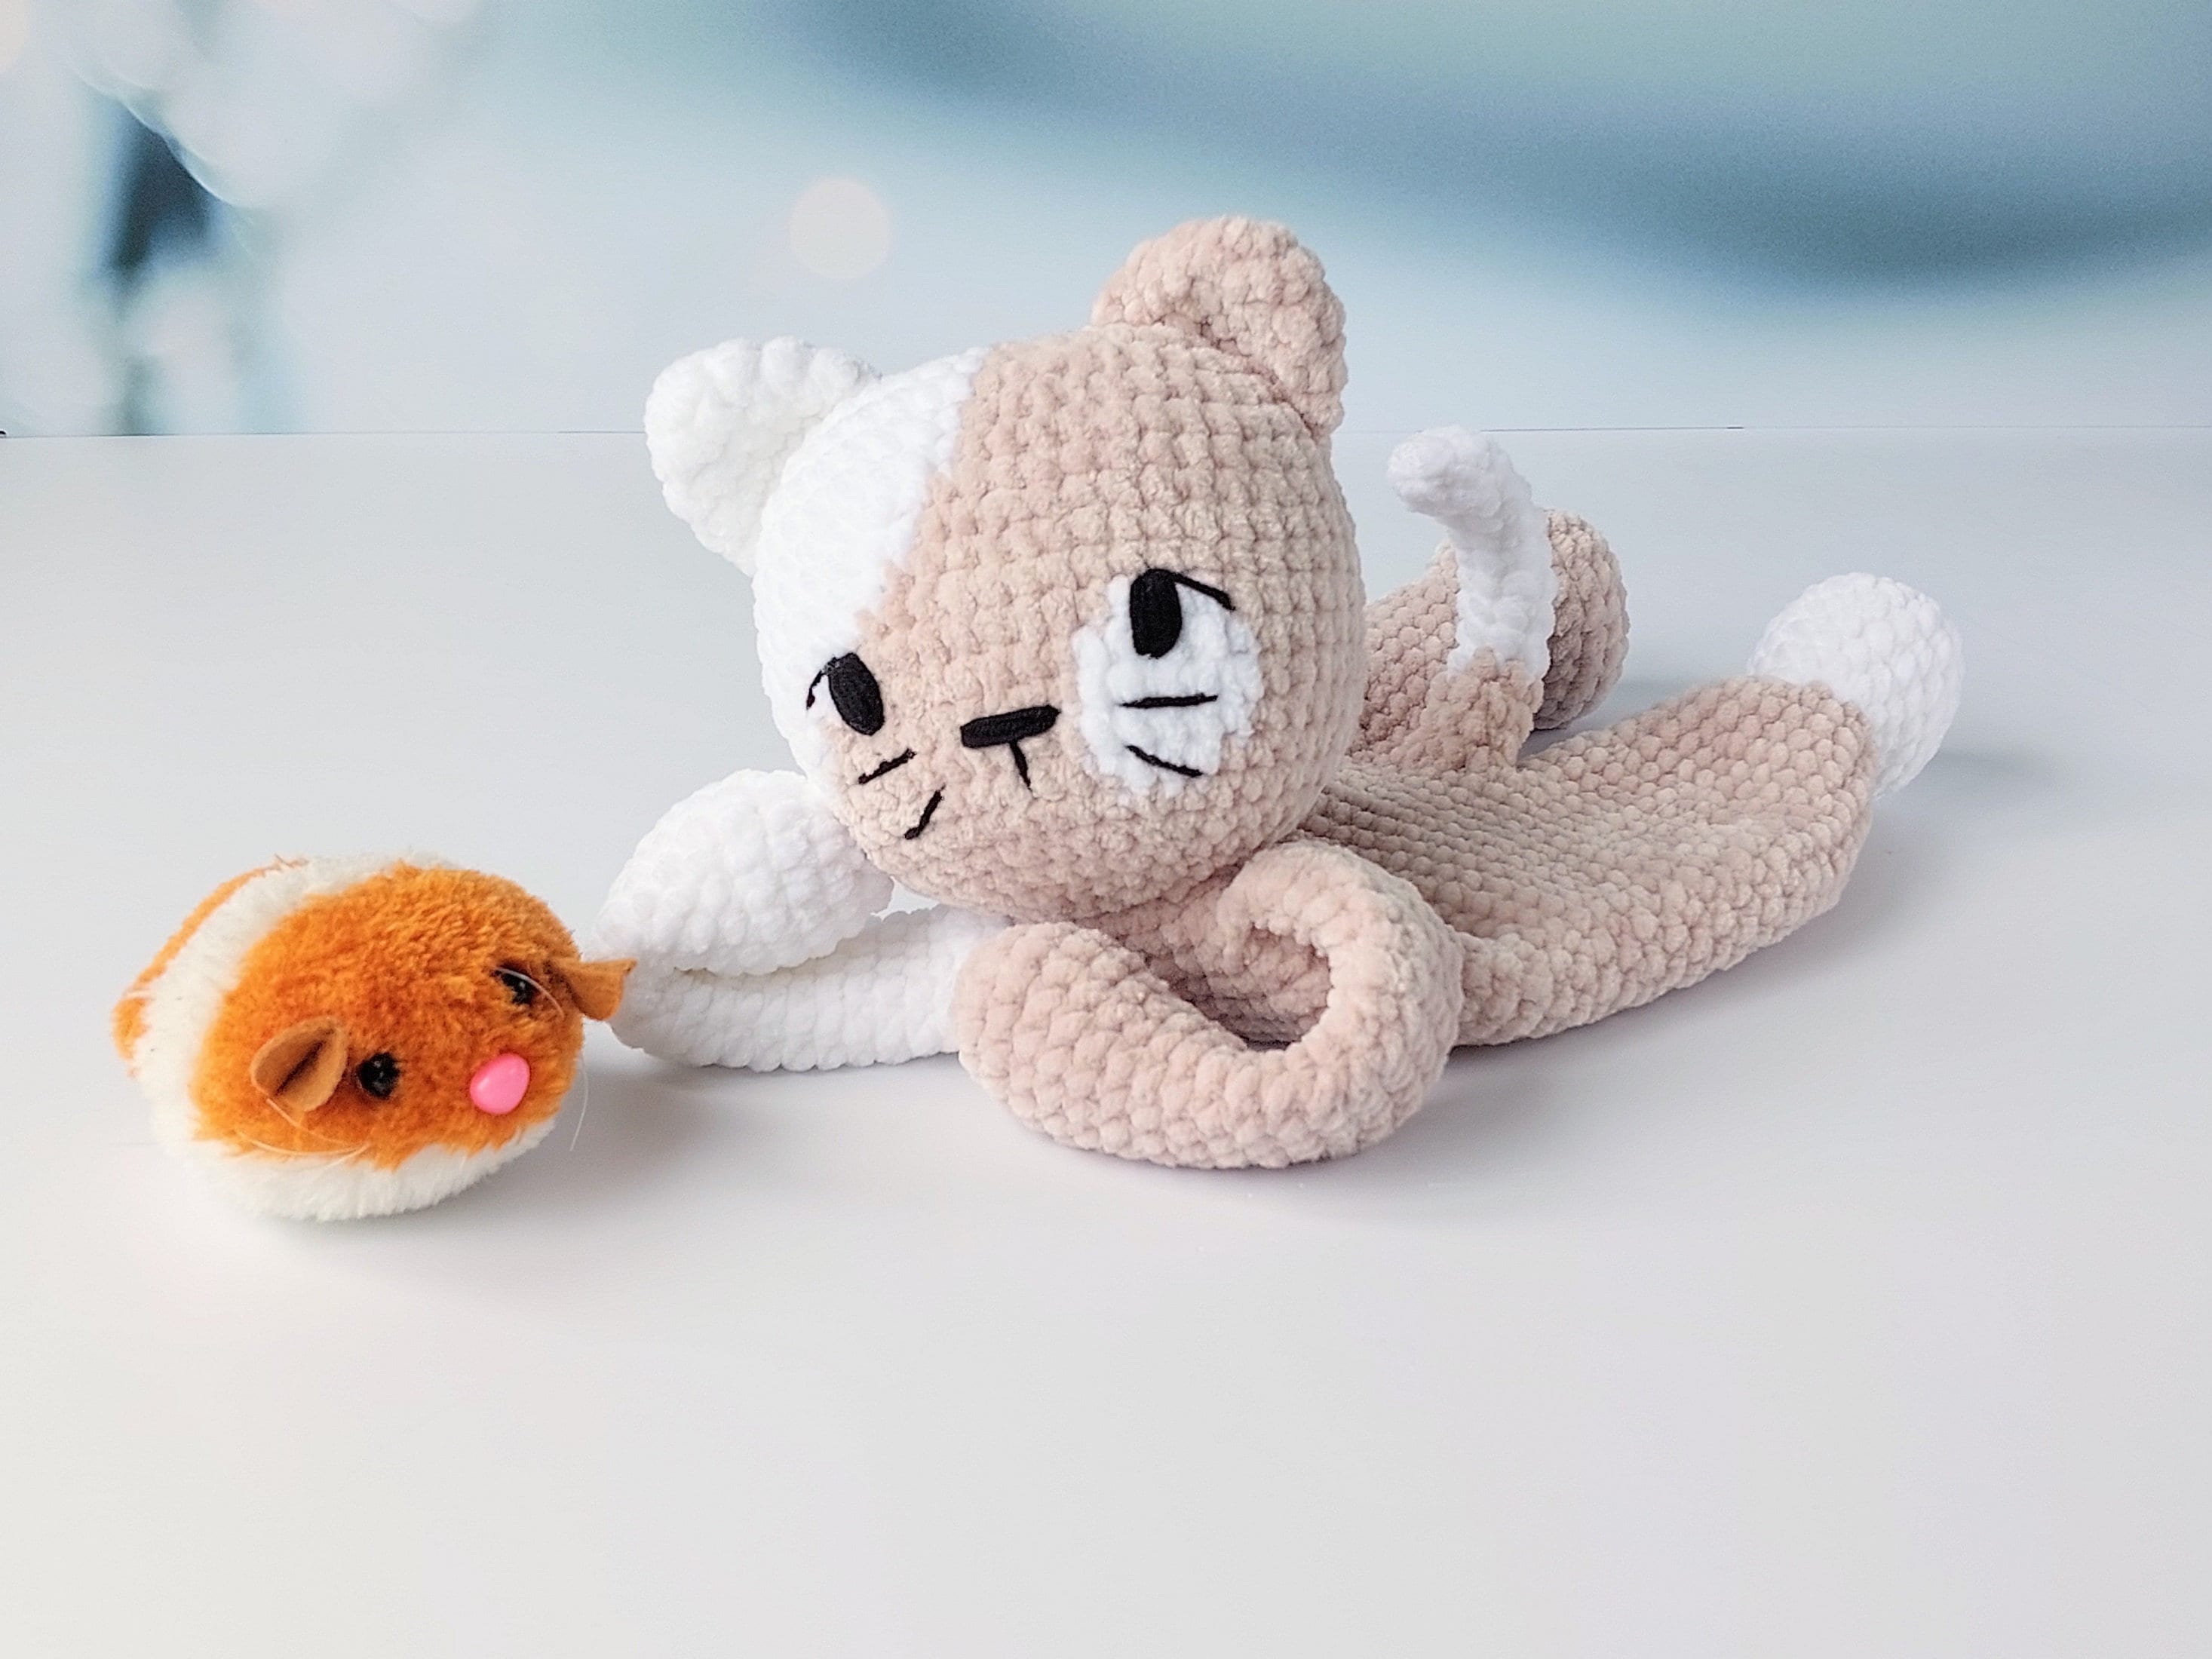 How to Crochet Animals Amigurumi - # 1 Tips & Free Patterns